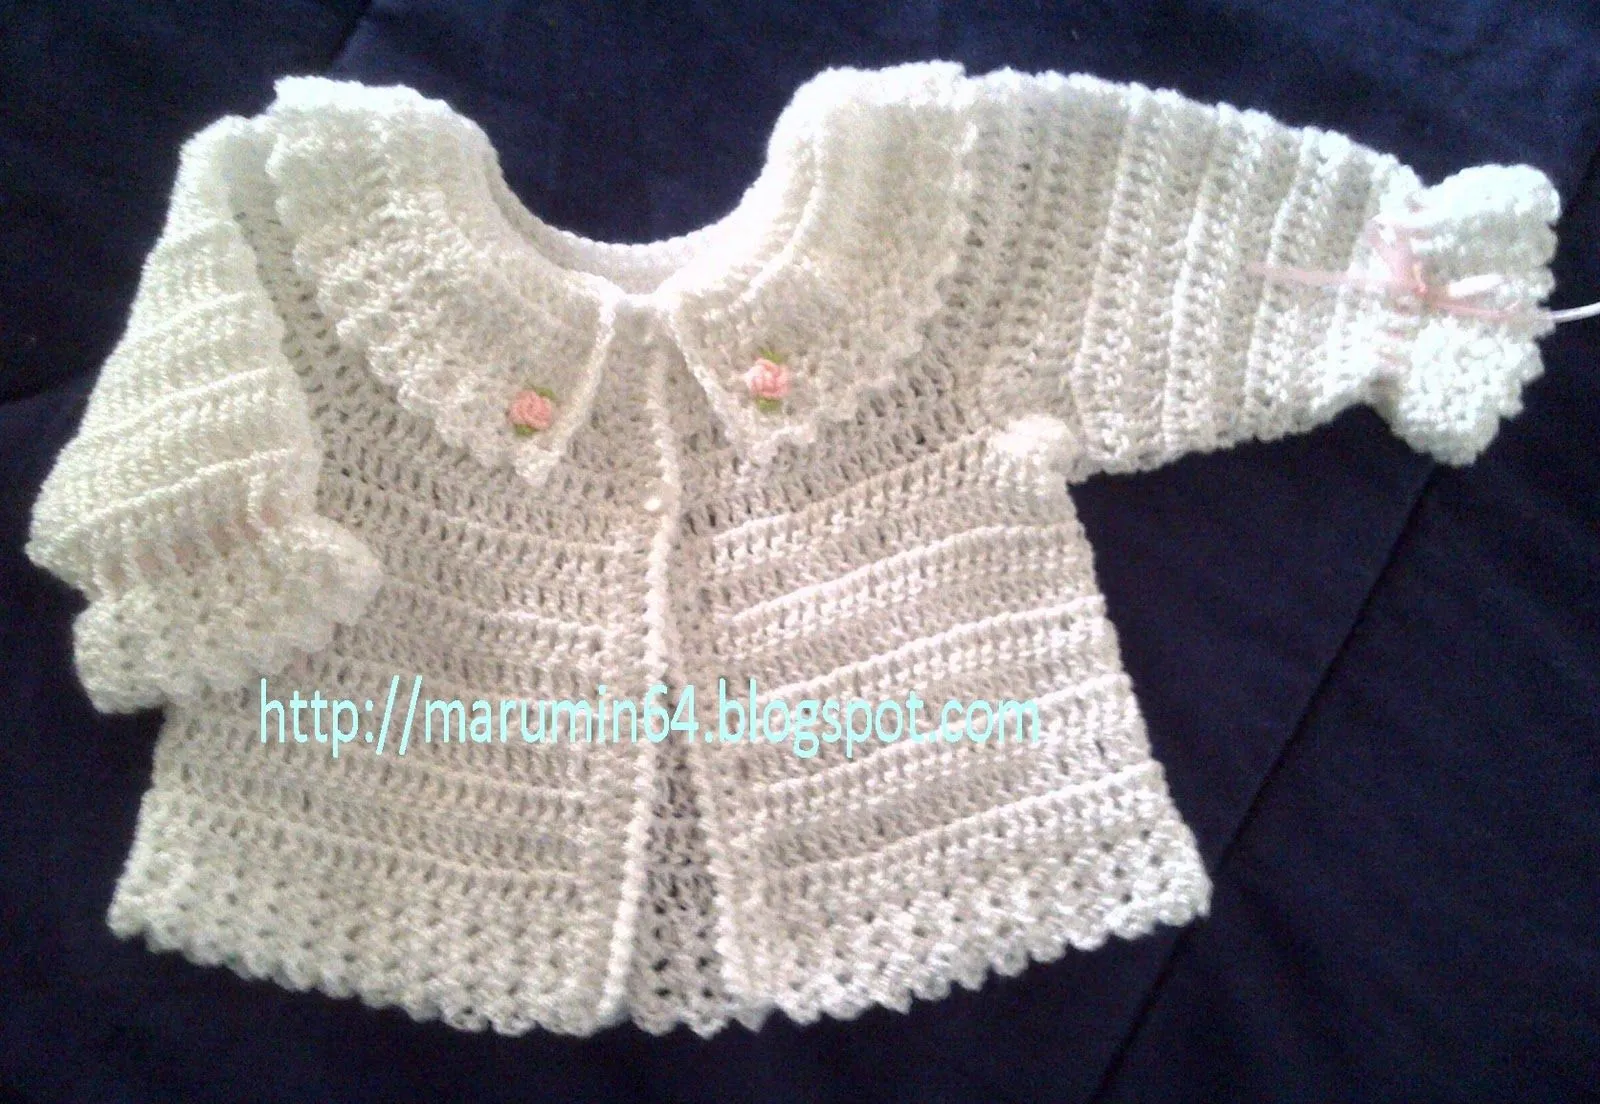  Crochet: Chambrita blanca con rositas bordadas en crochet para bebe ...